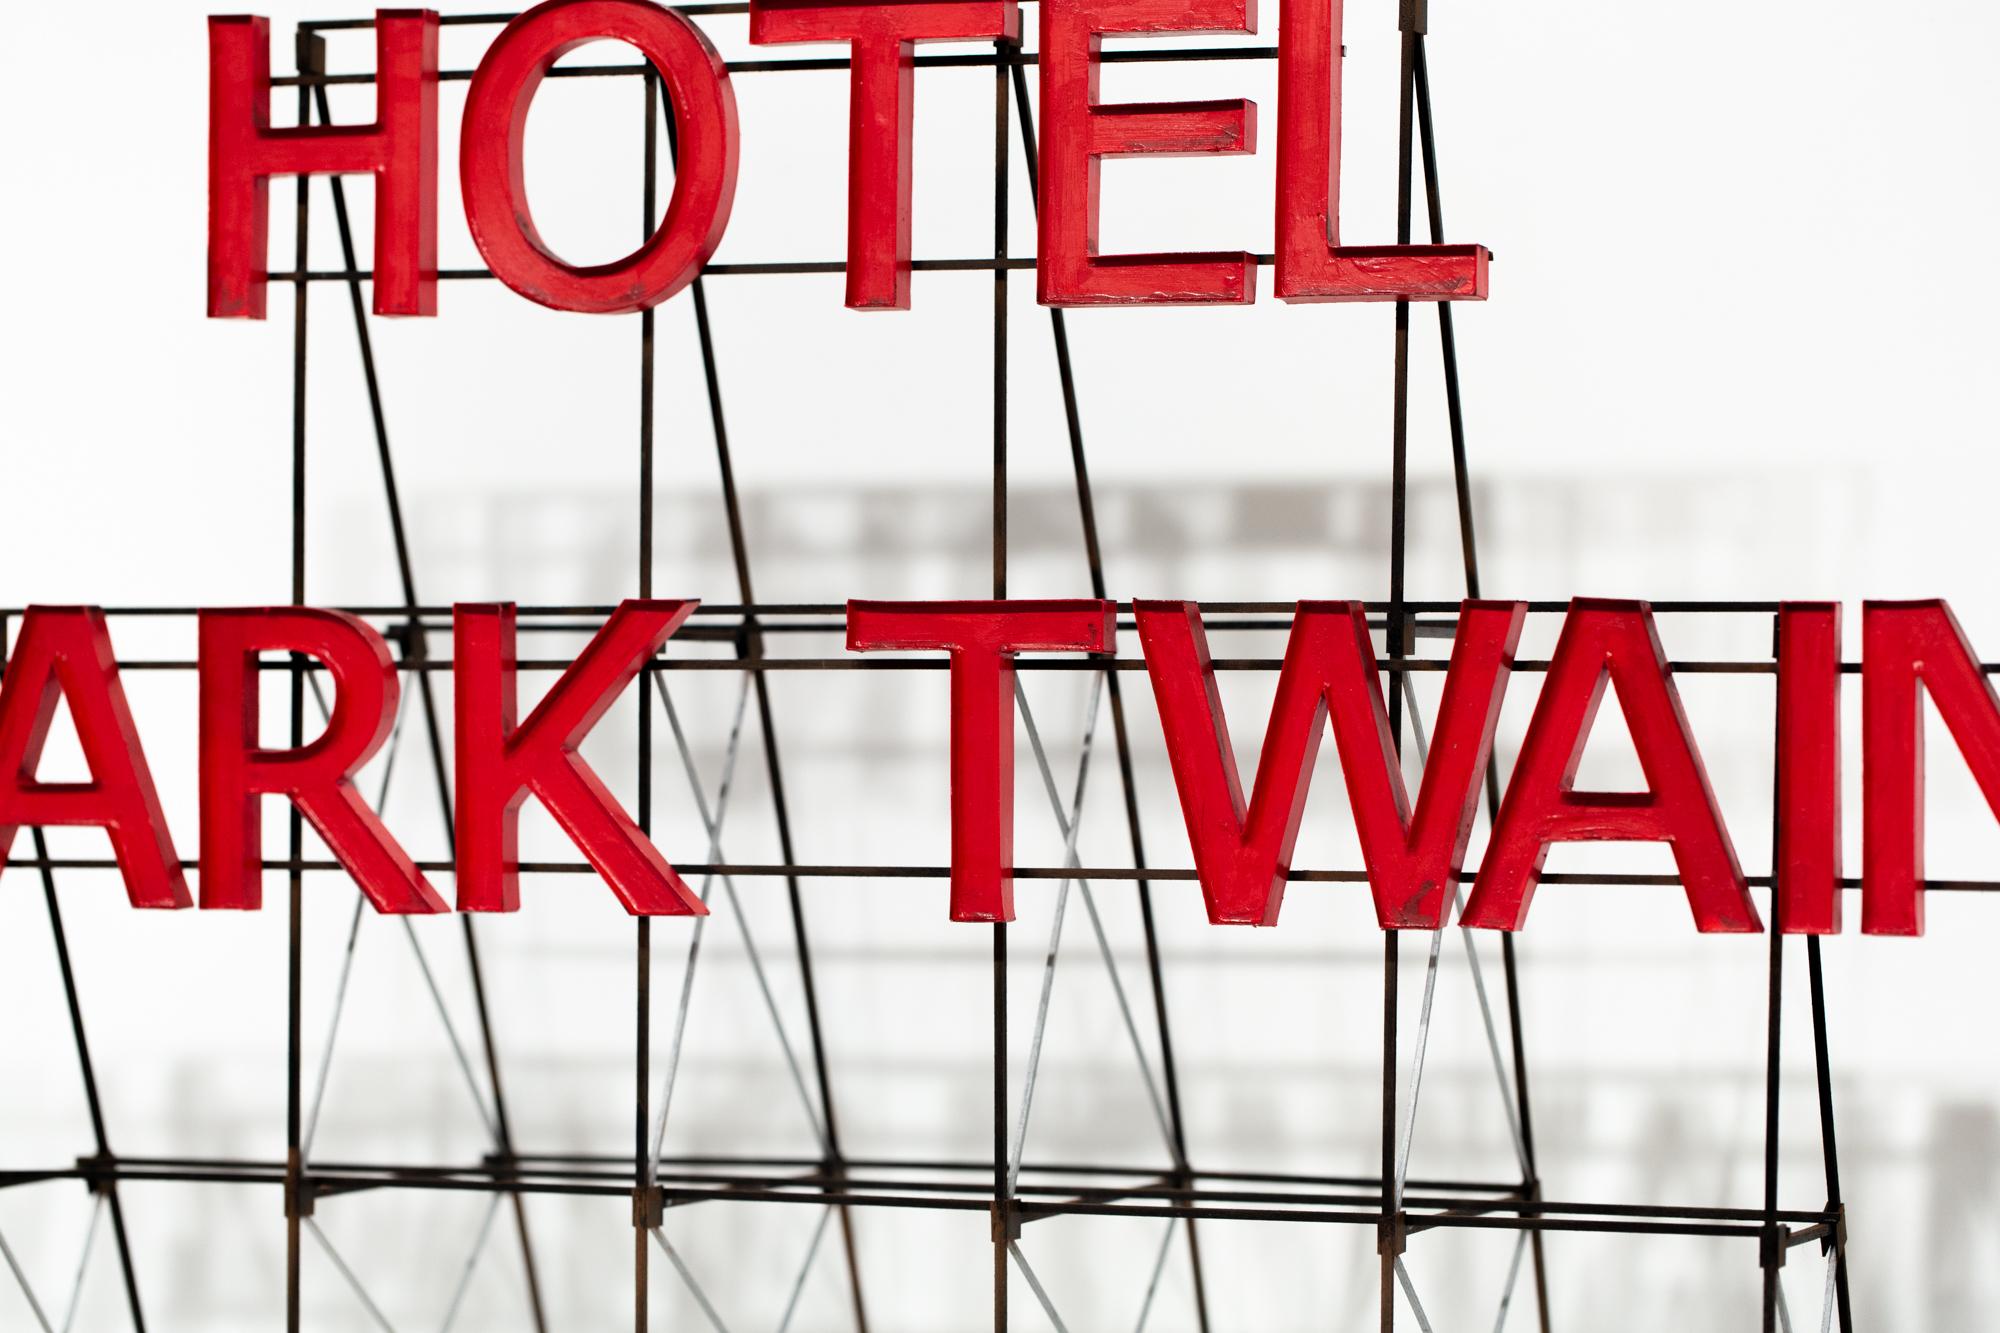 Hotel-Schild Mark Twain – Sculpture von Drew Leshko